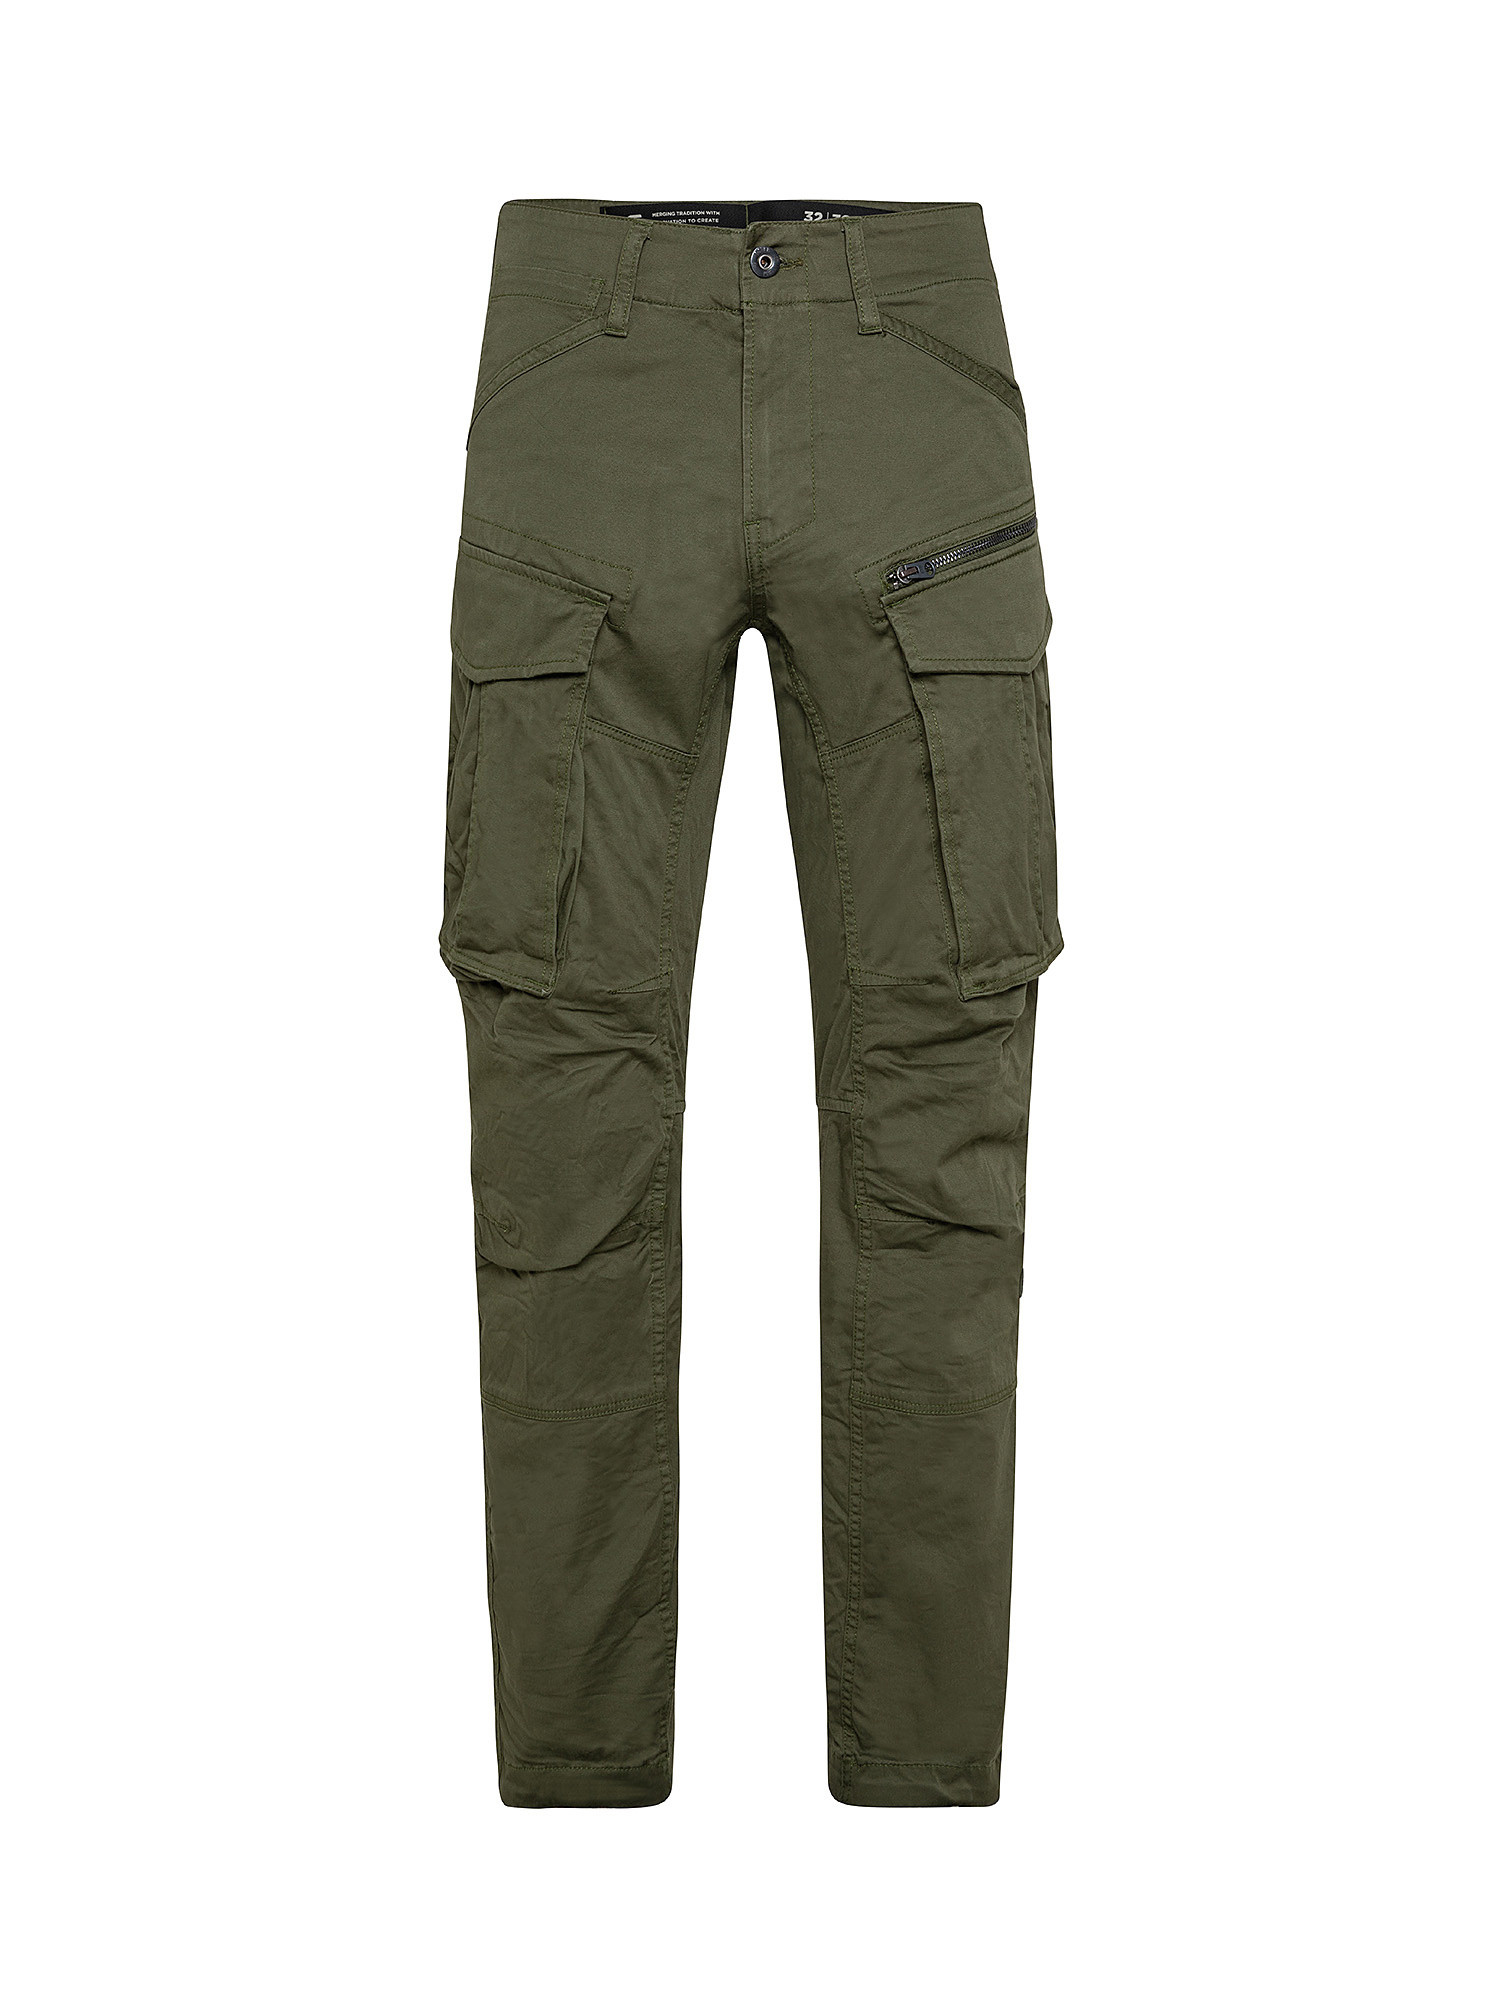 G-Star Cargo Pants, Olive Green, large image number 0